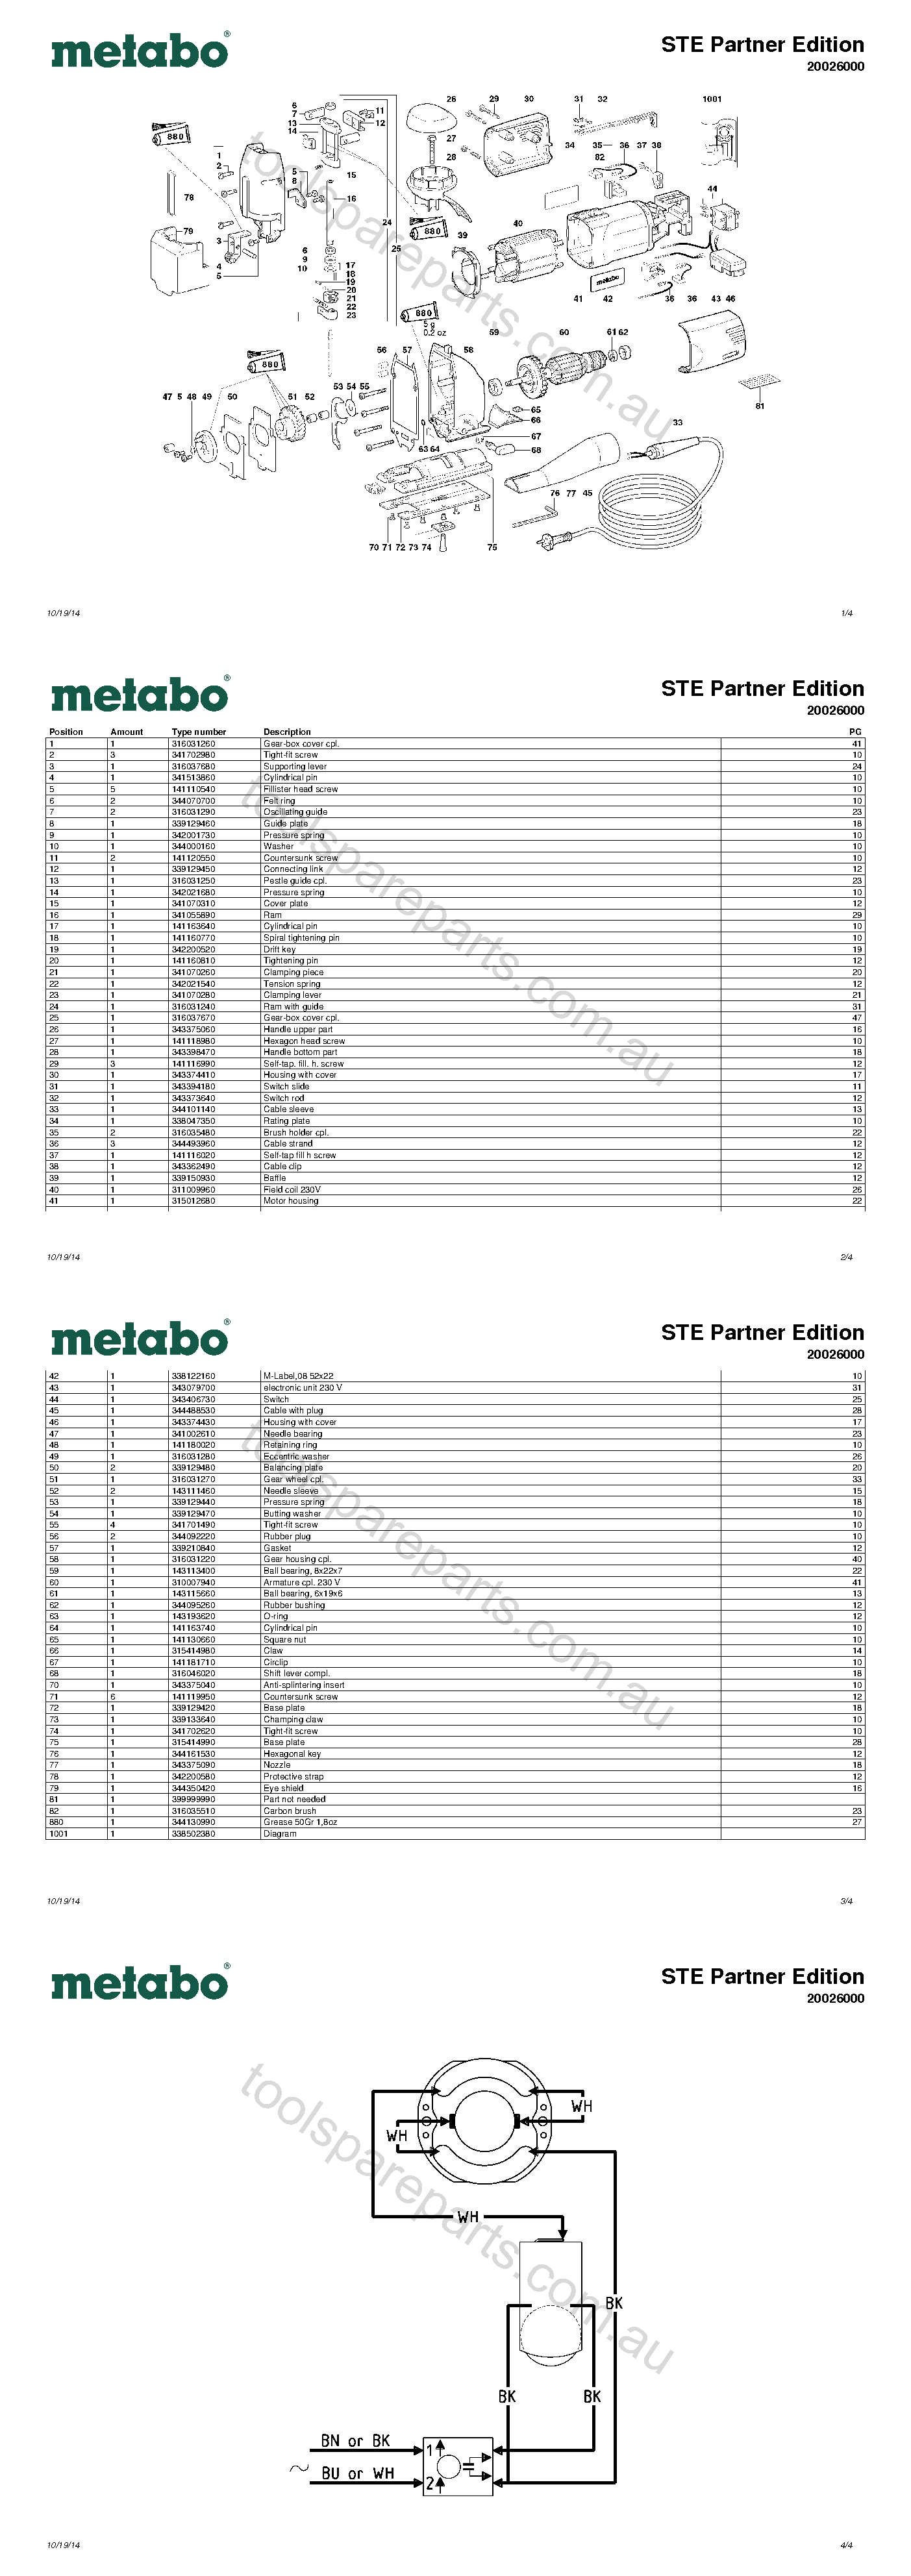 Metabo STE Partner Edition 20026000  Diagram 1